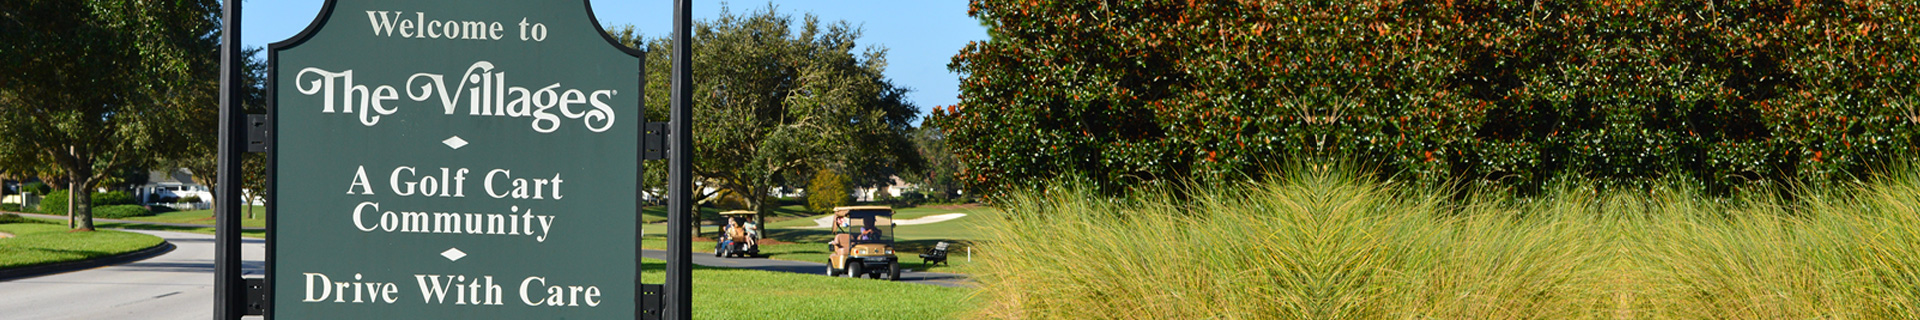 The Villages - A Golf Cart Community